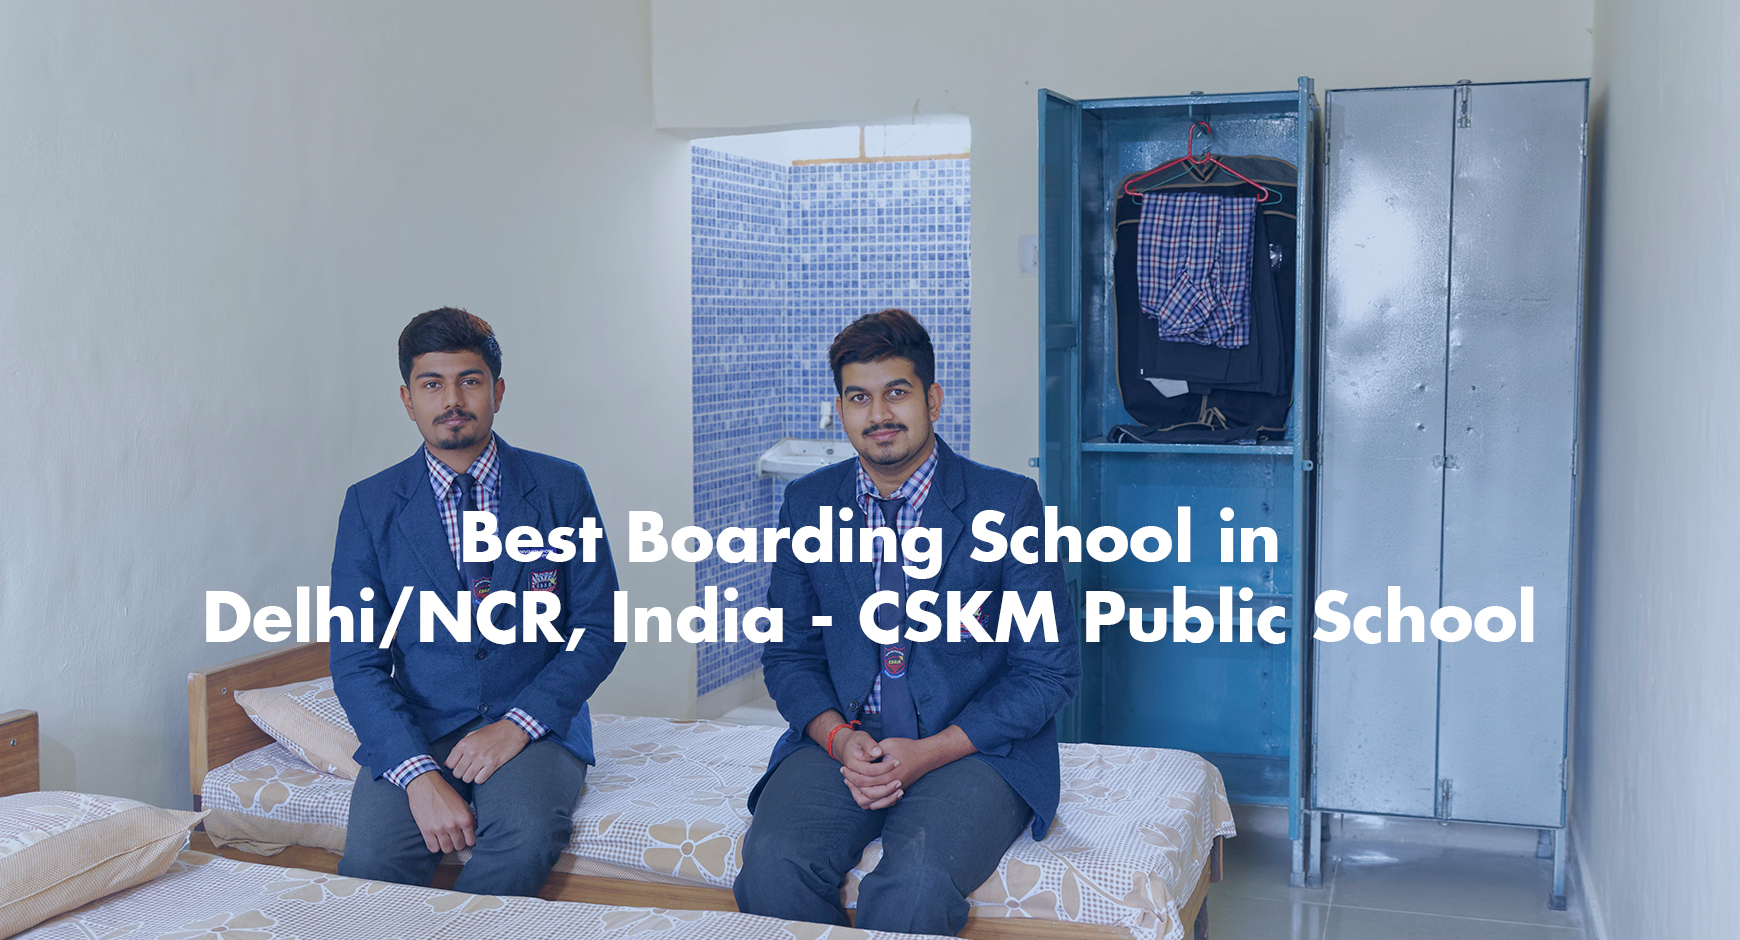 Best Boarding School in Delhi/NCR, India - CSKM Public School